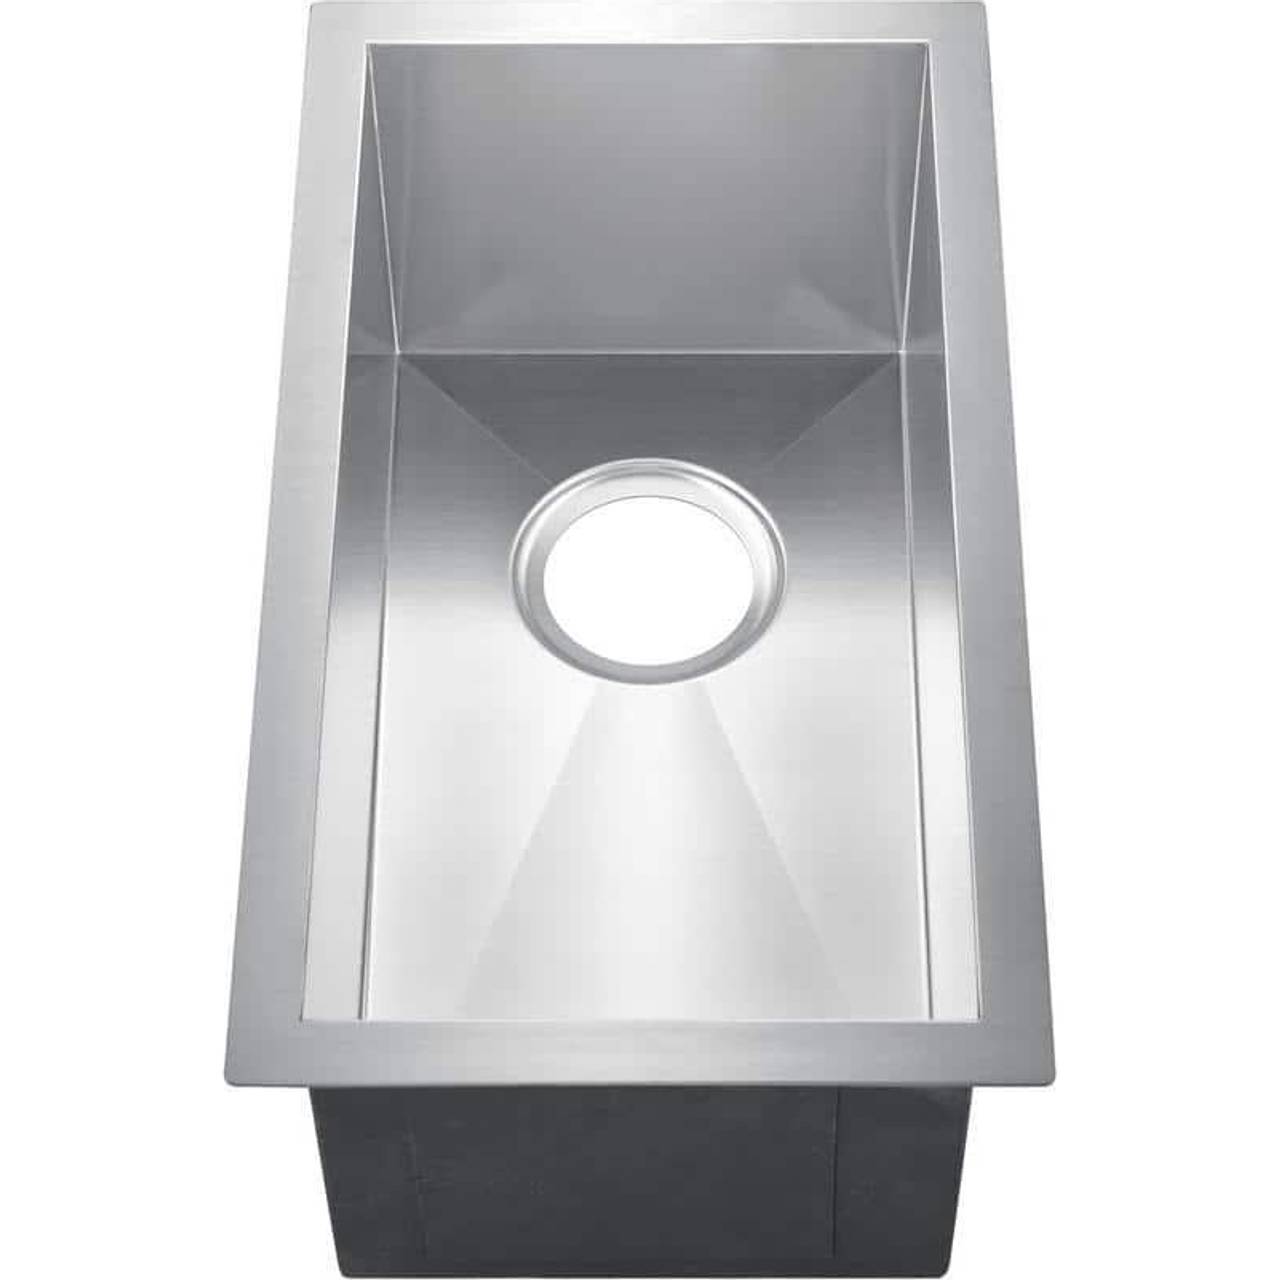 black stainless steel sink faucet